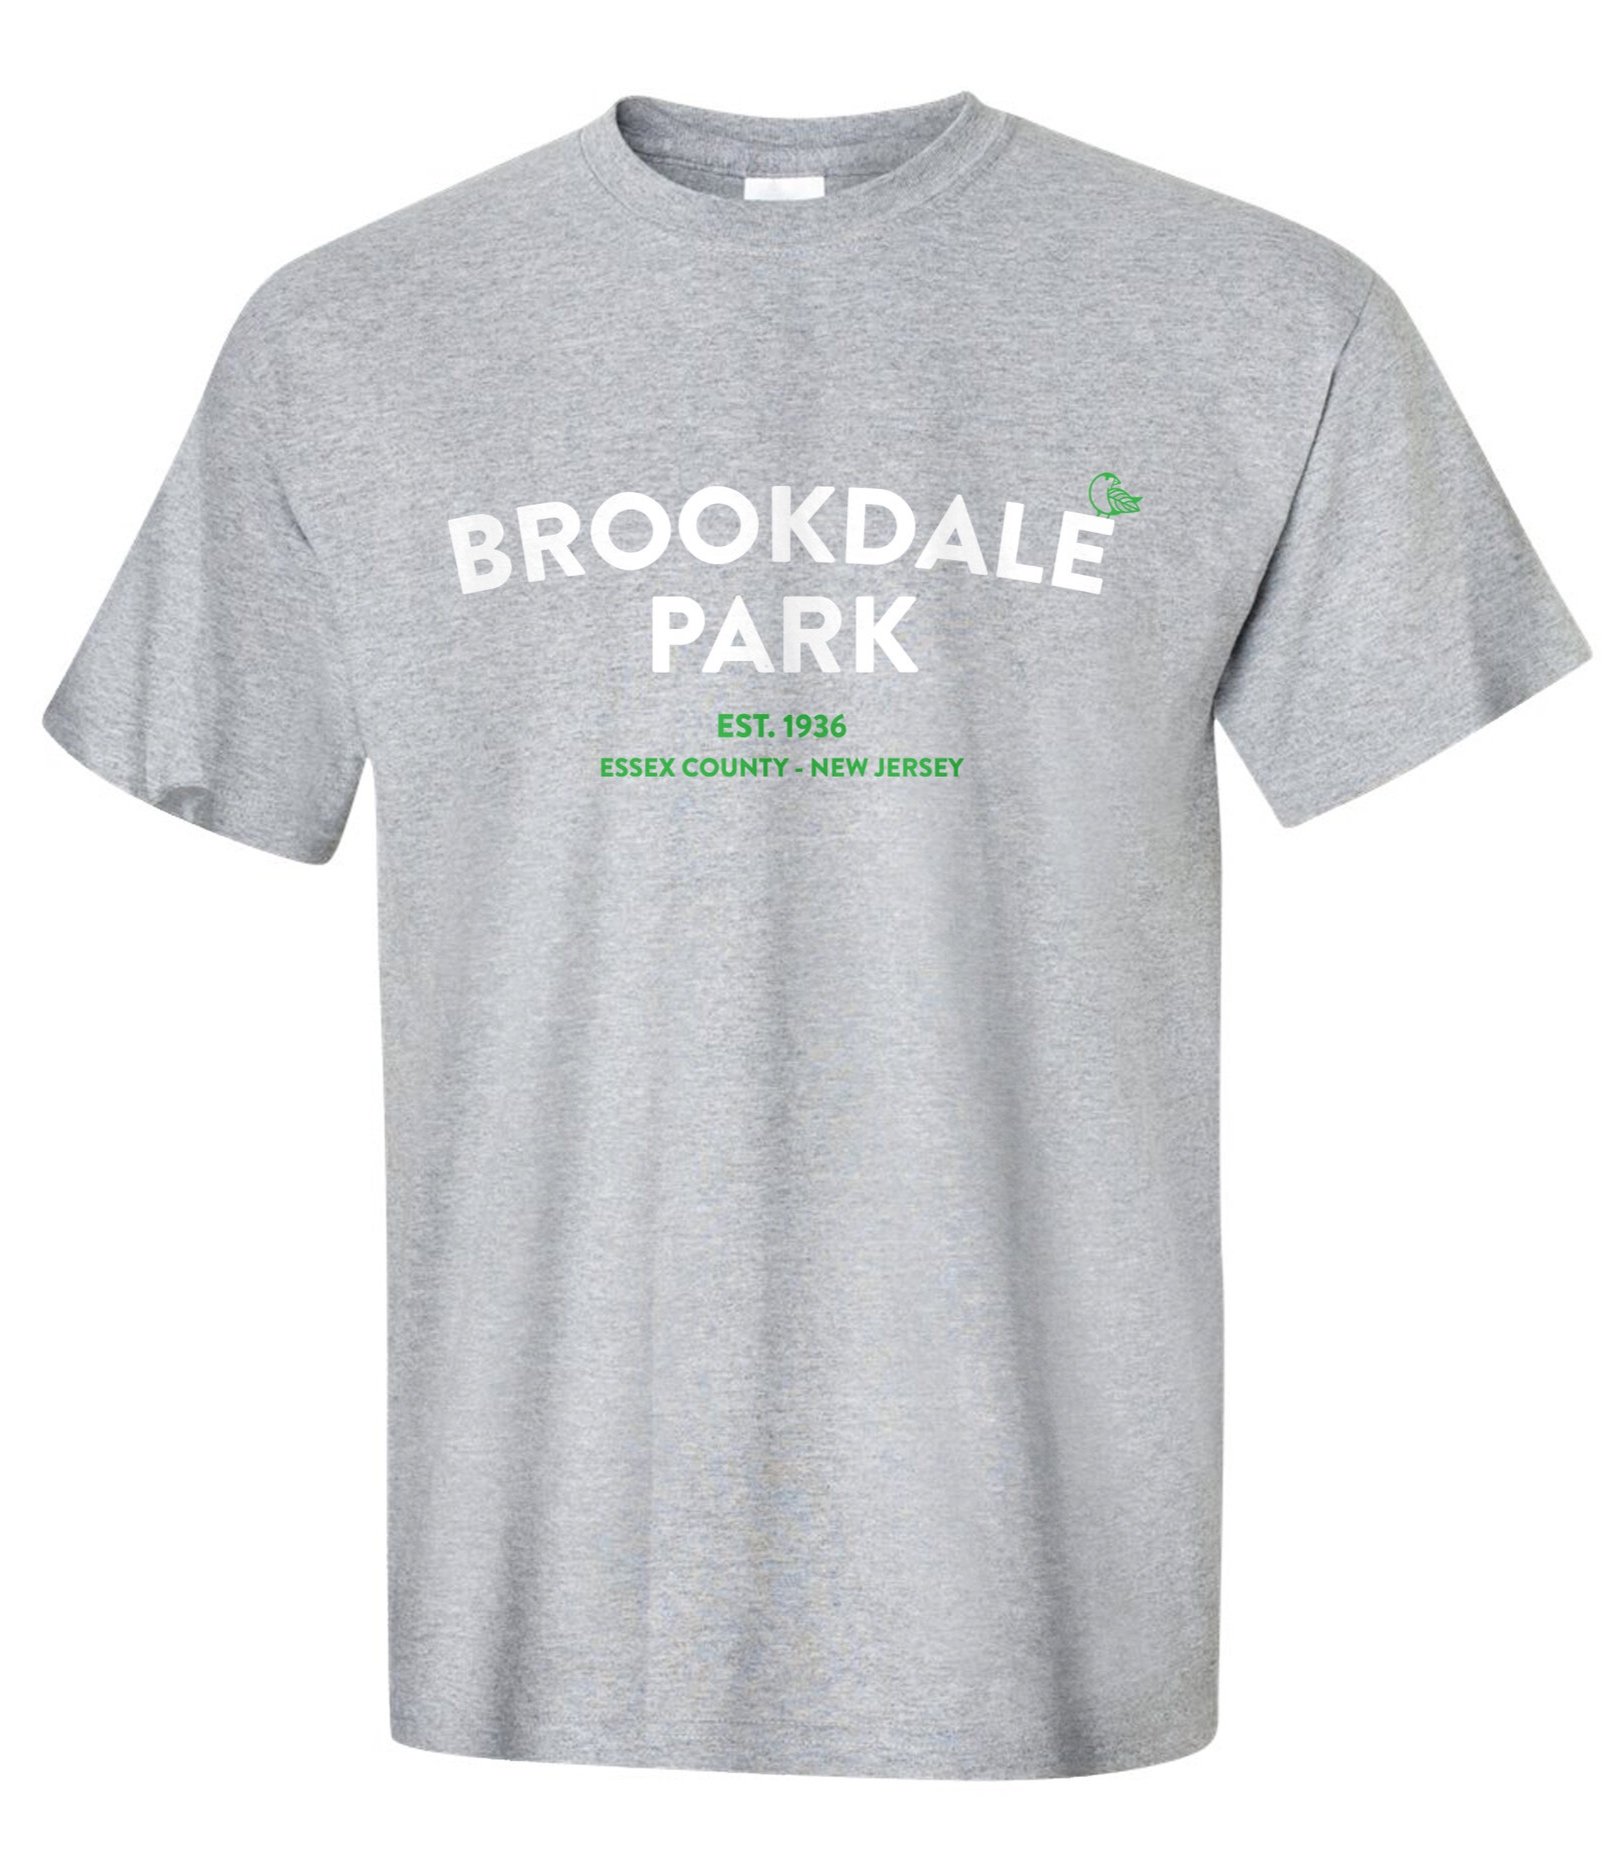 keuken Tutor cultuur Brookdale Park <br/>T-Shirt — Brookdale Park Conservancy